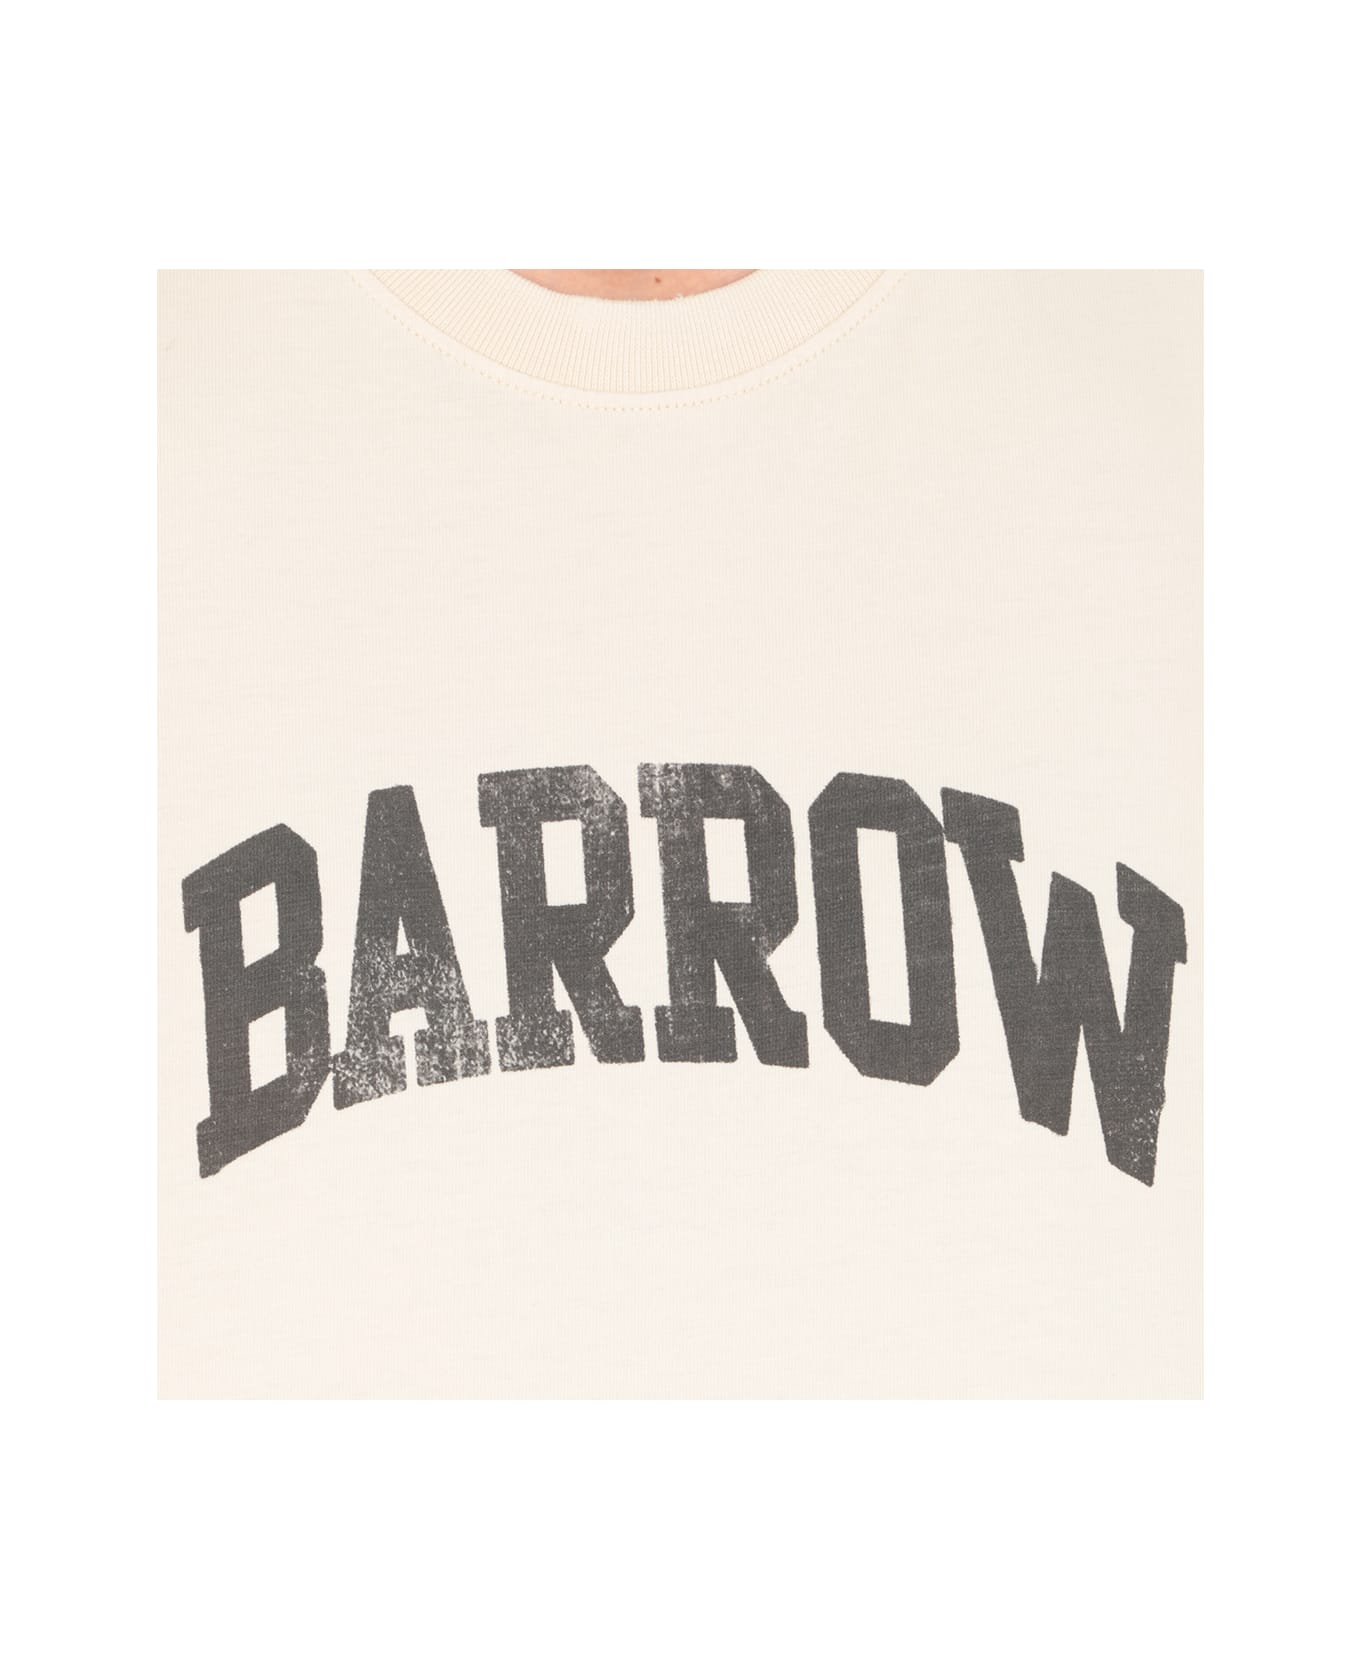 Barrow Logoed T-shirt - Ivory